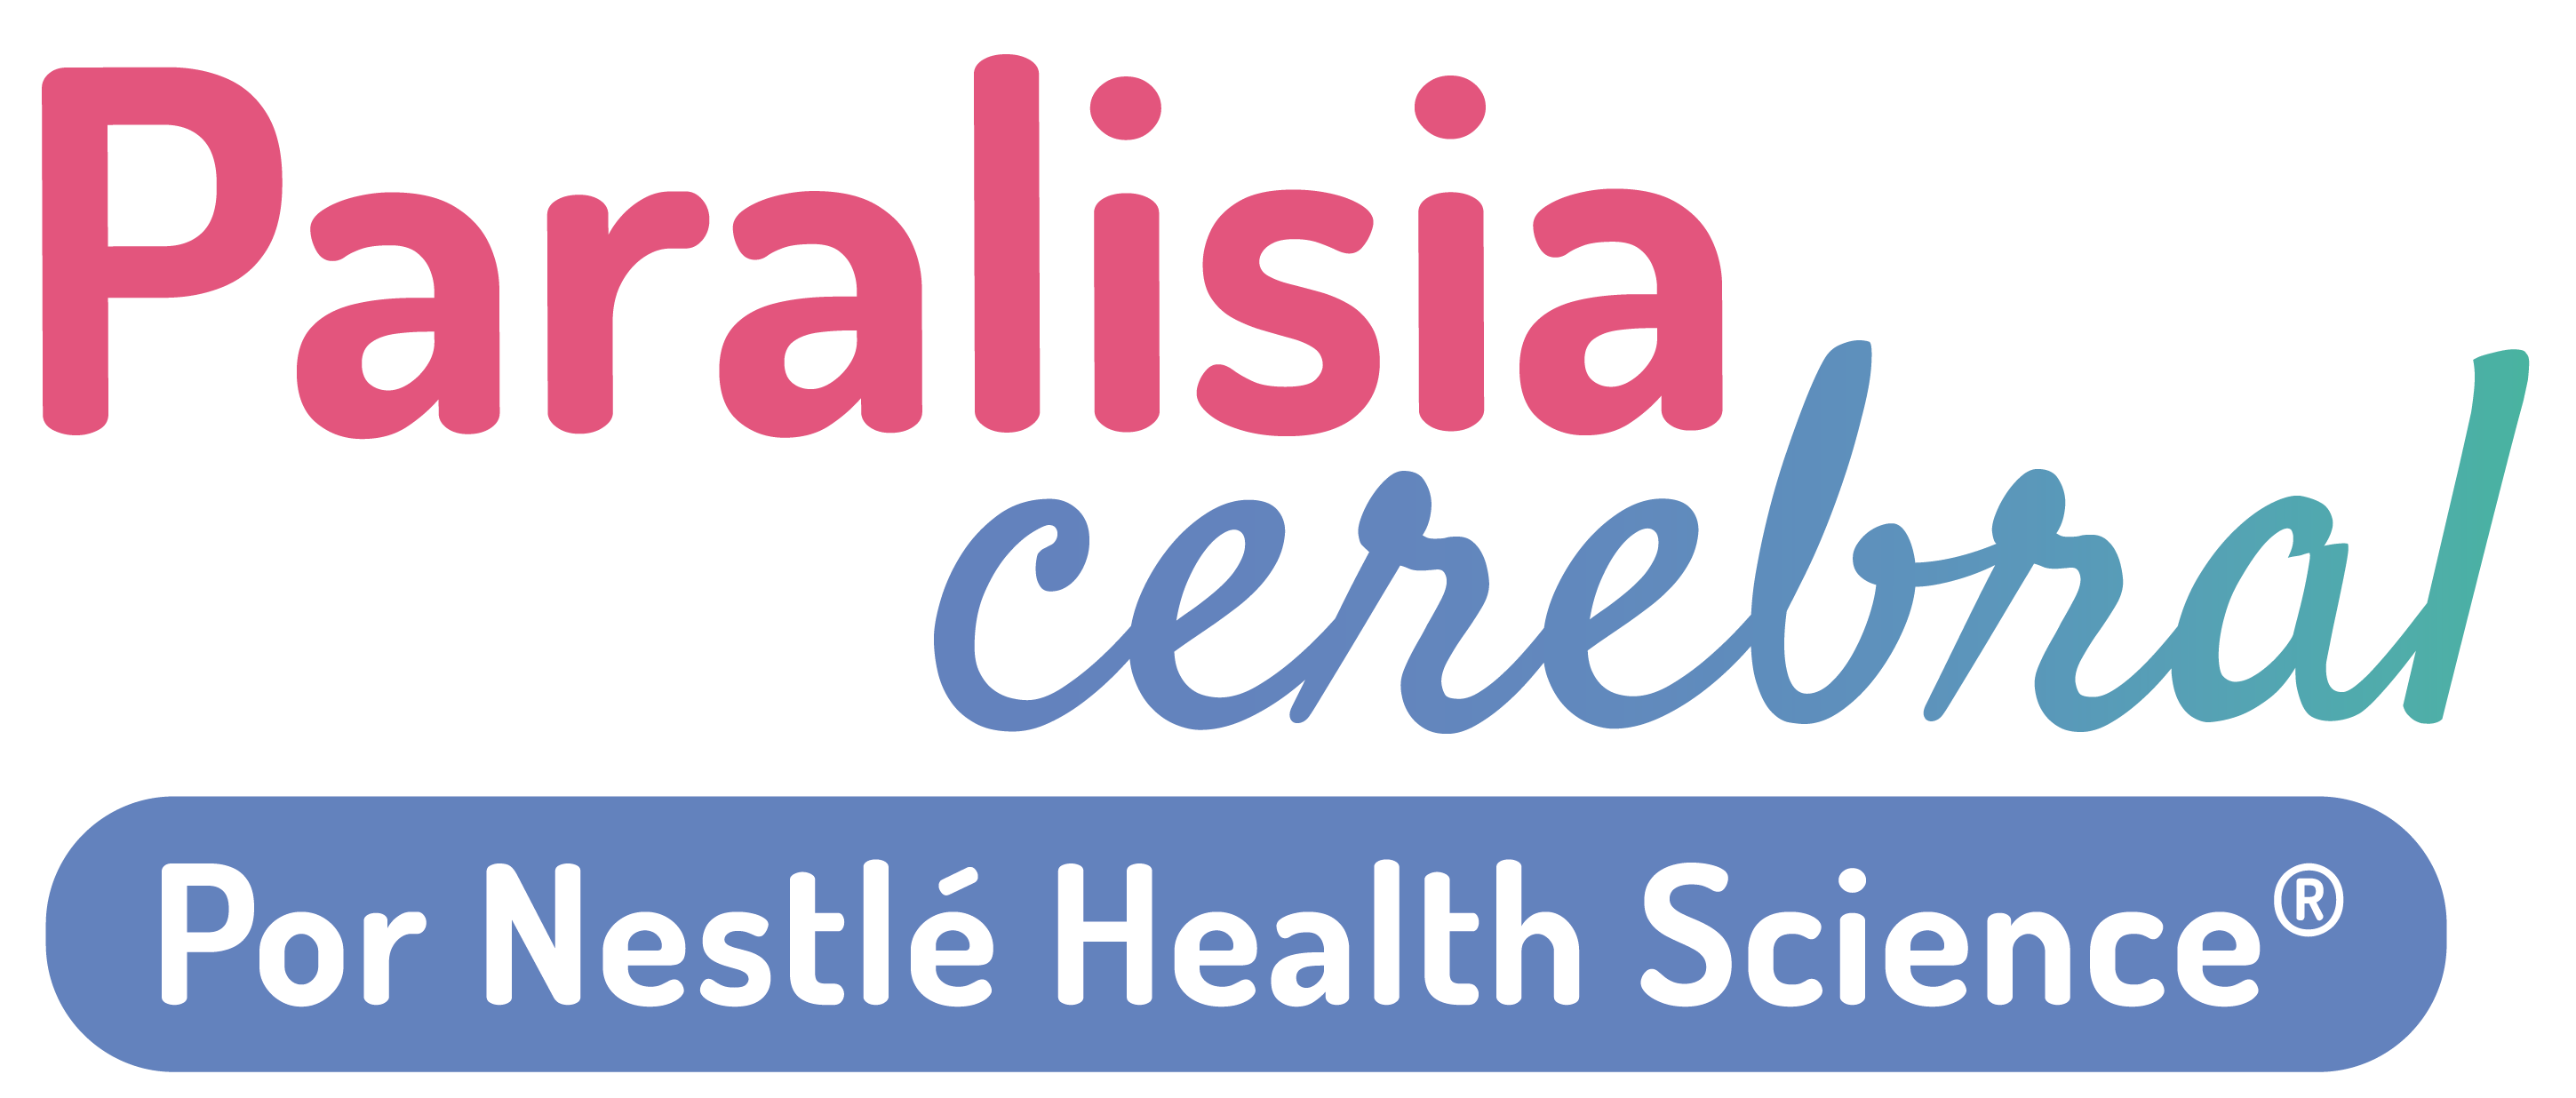 cerebral-palsy-logo